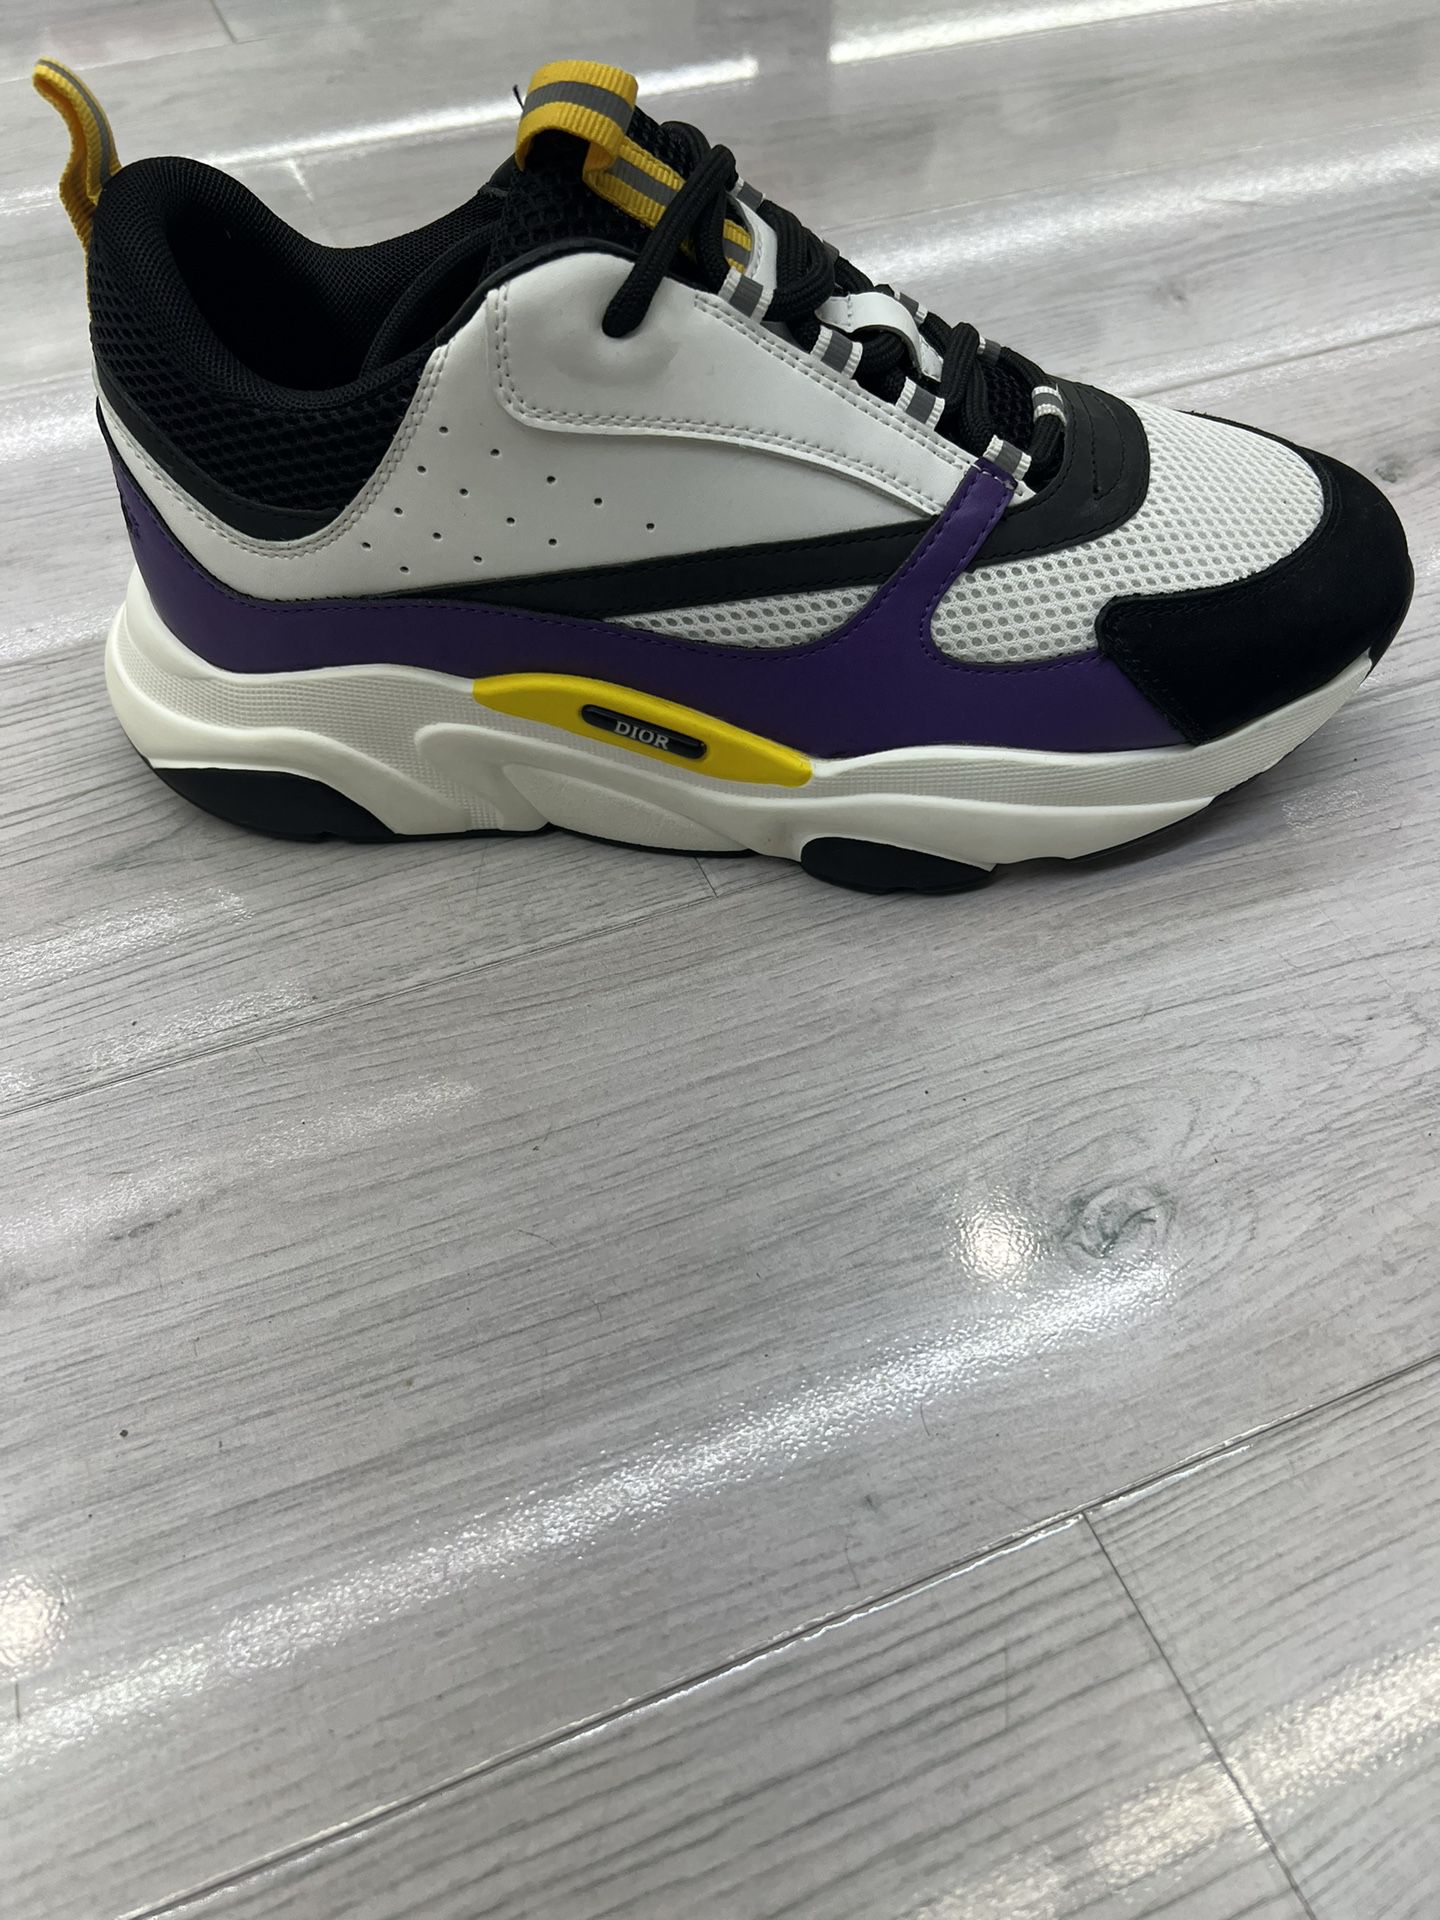 Dior Sneakers Purple